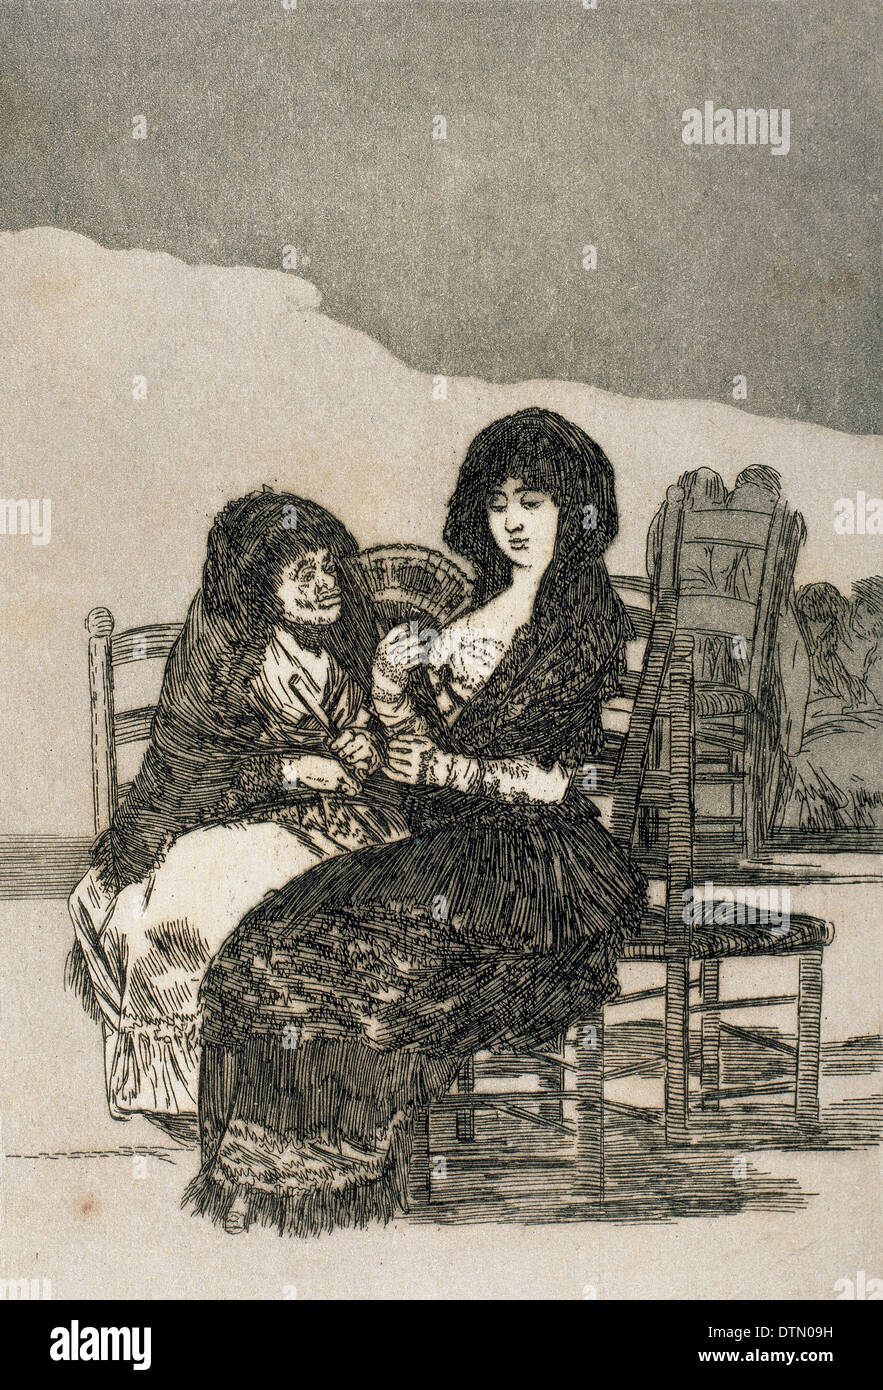 Francisco de Goya (1746-1828). Spanish painter and printmaker. Los Caprichos. 'Bellos Consejos' (Good Advice). Aquatint. Stock Photo